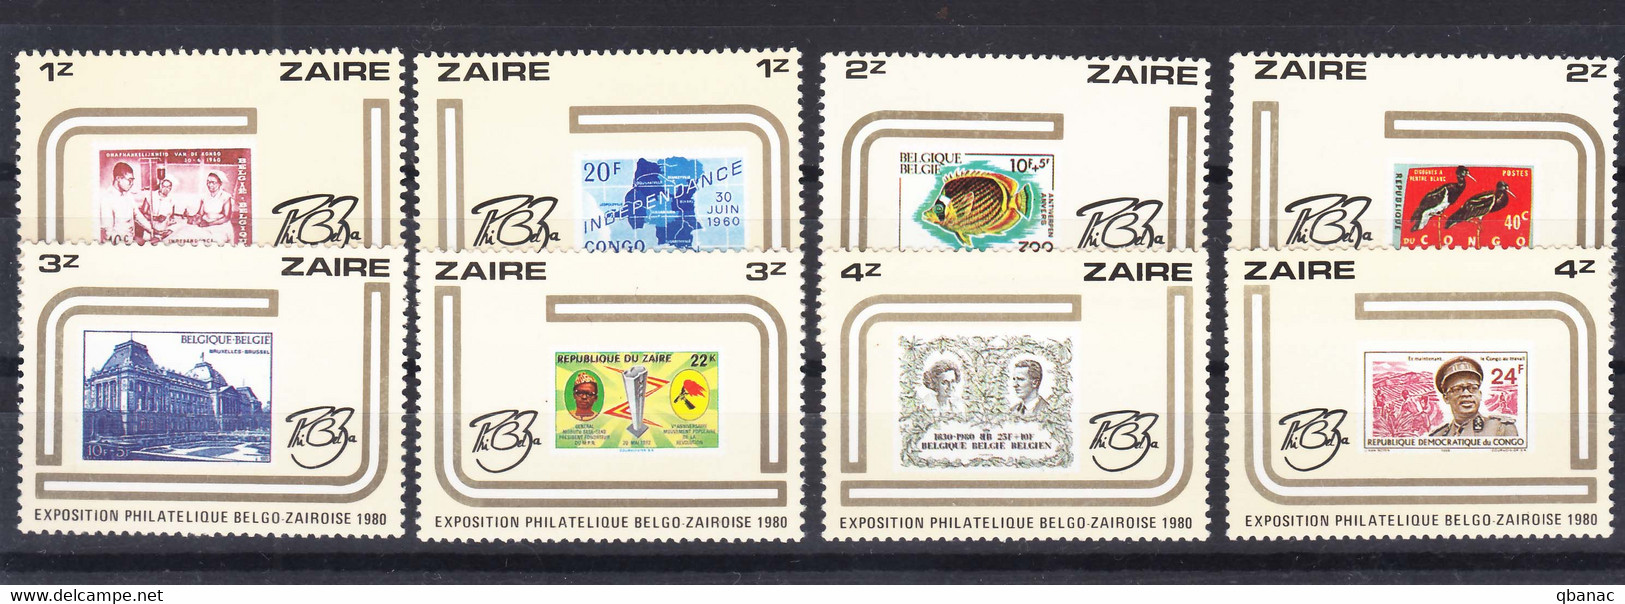 Zaire (Congo) 1980 Mint Never Hinged Set, Philatelic Exposition - Unused Stamps